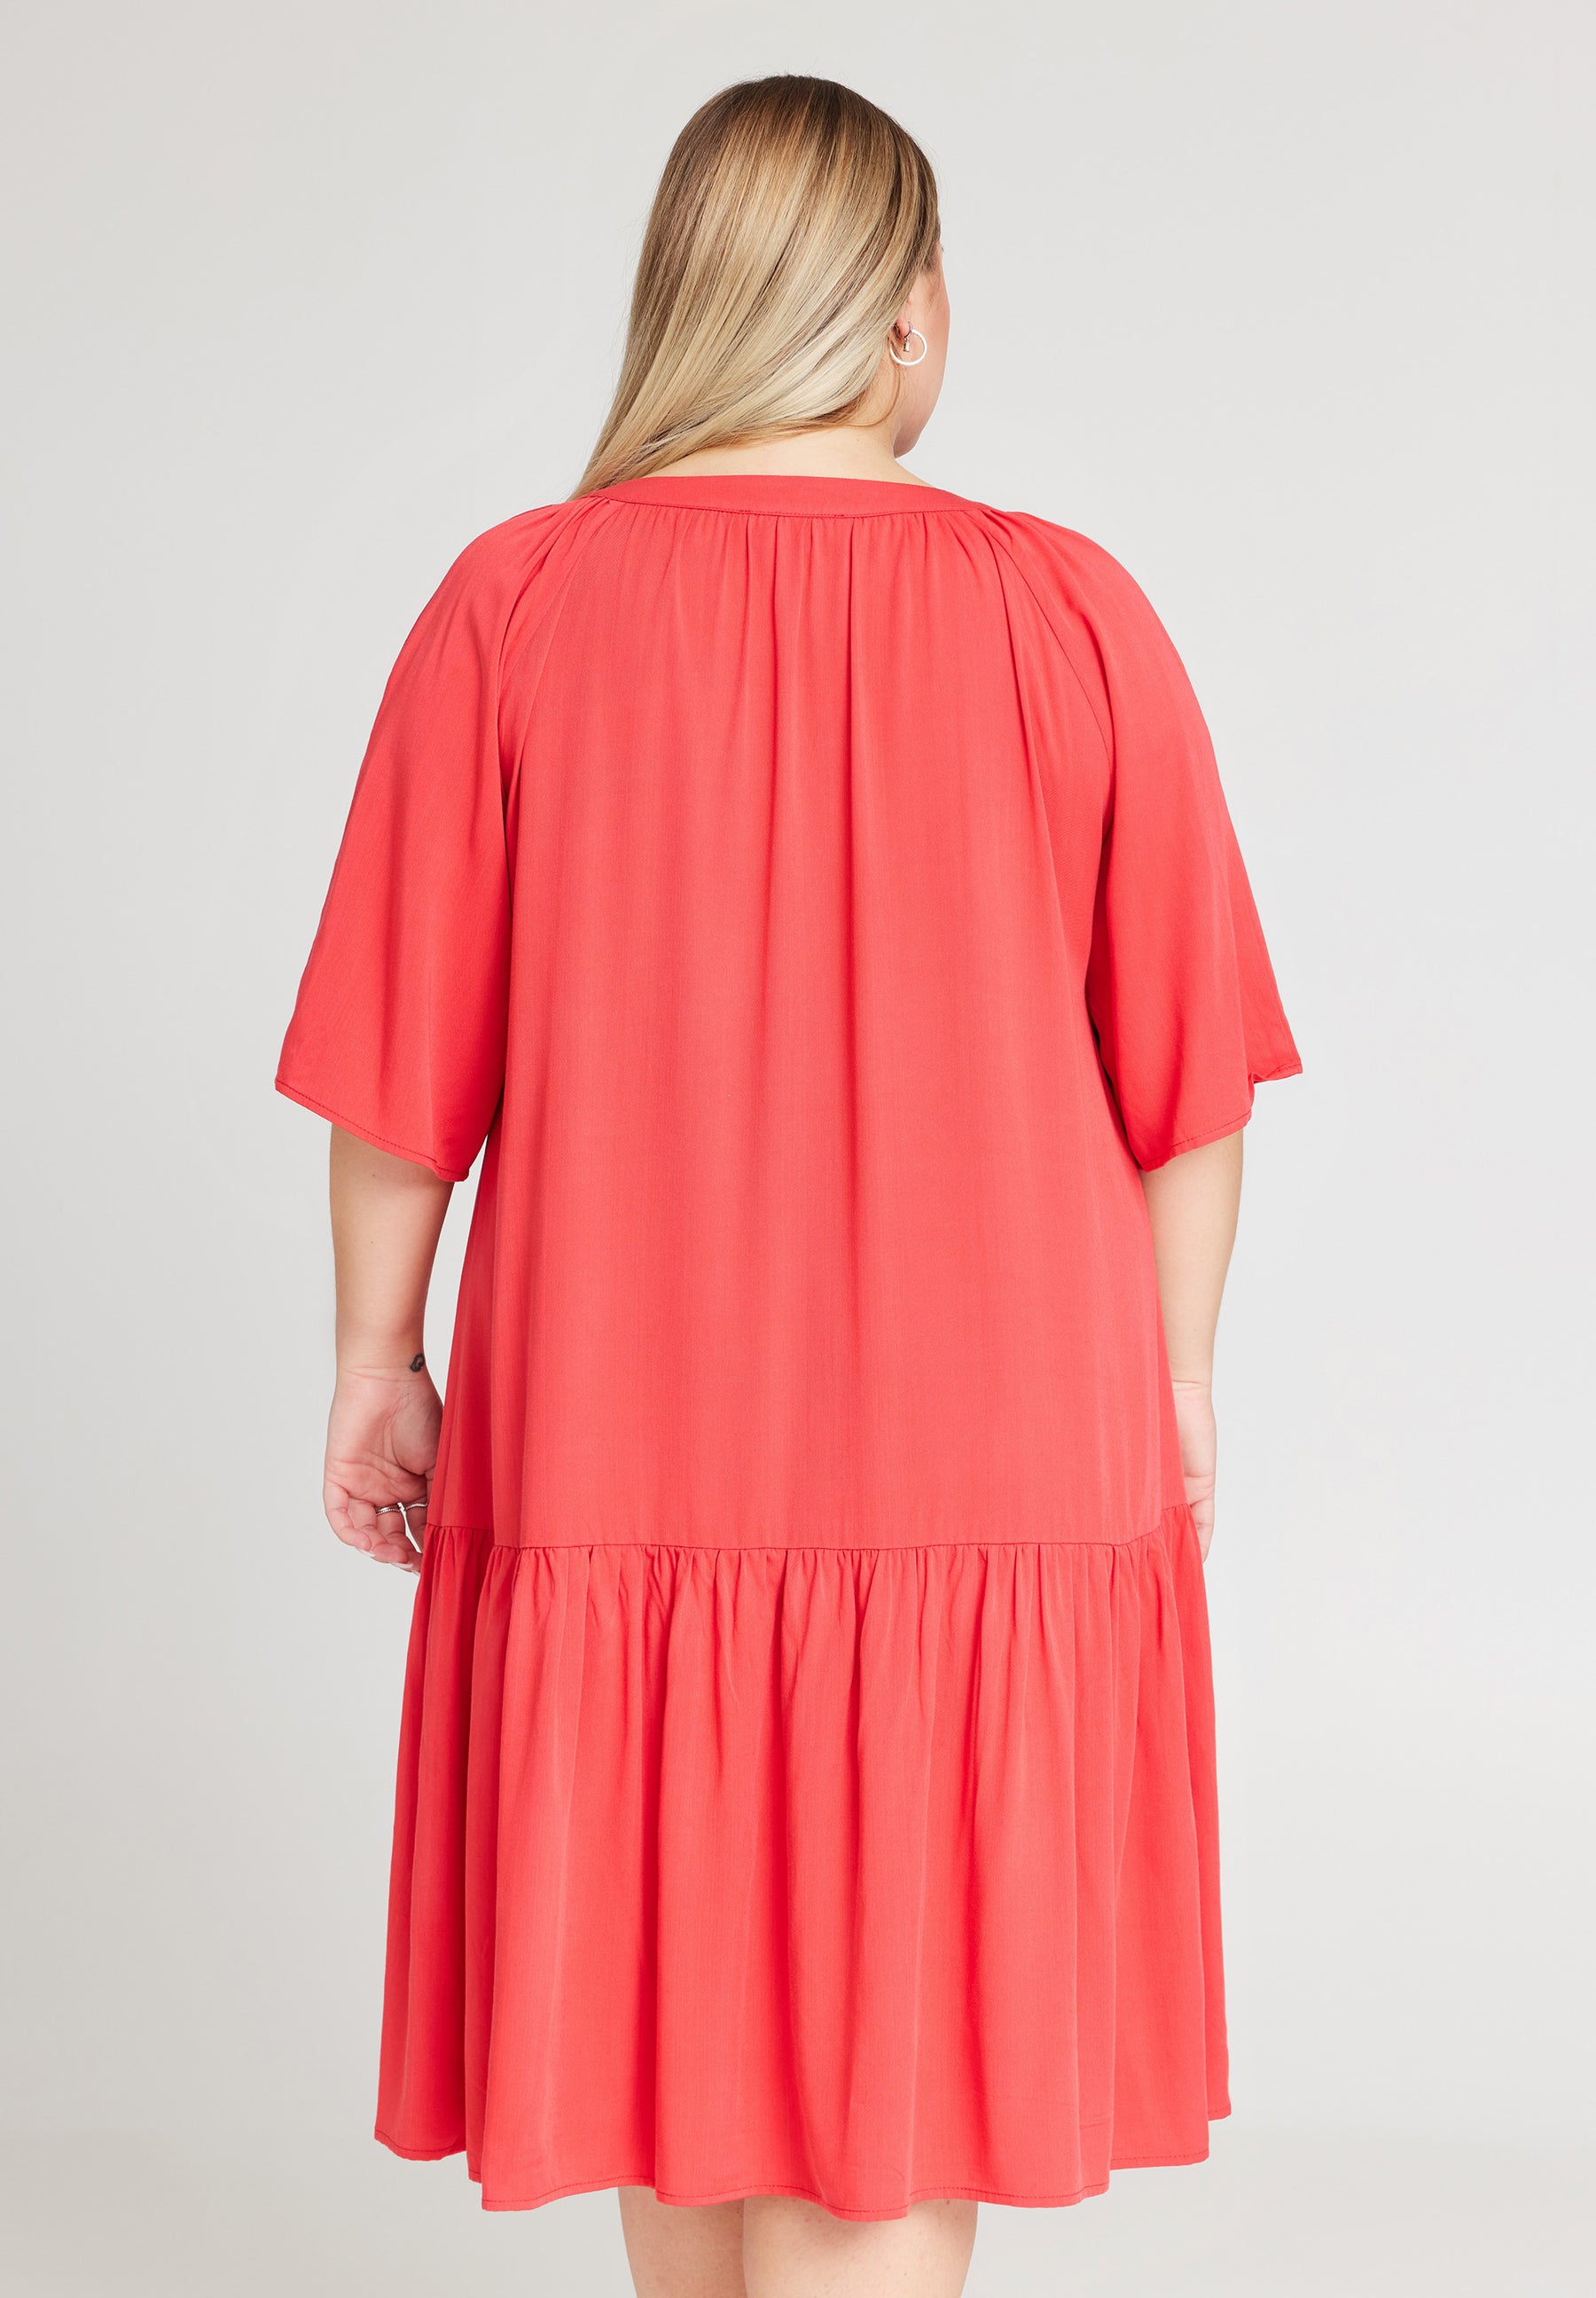 NO. 1 BY OX Midi-kjole med flæsekant Kjoler Rød